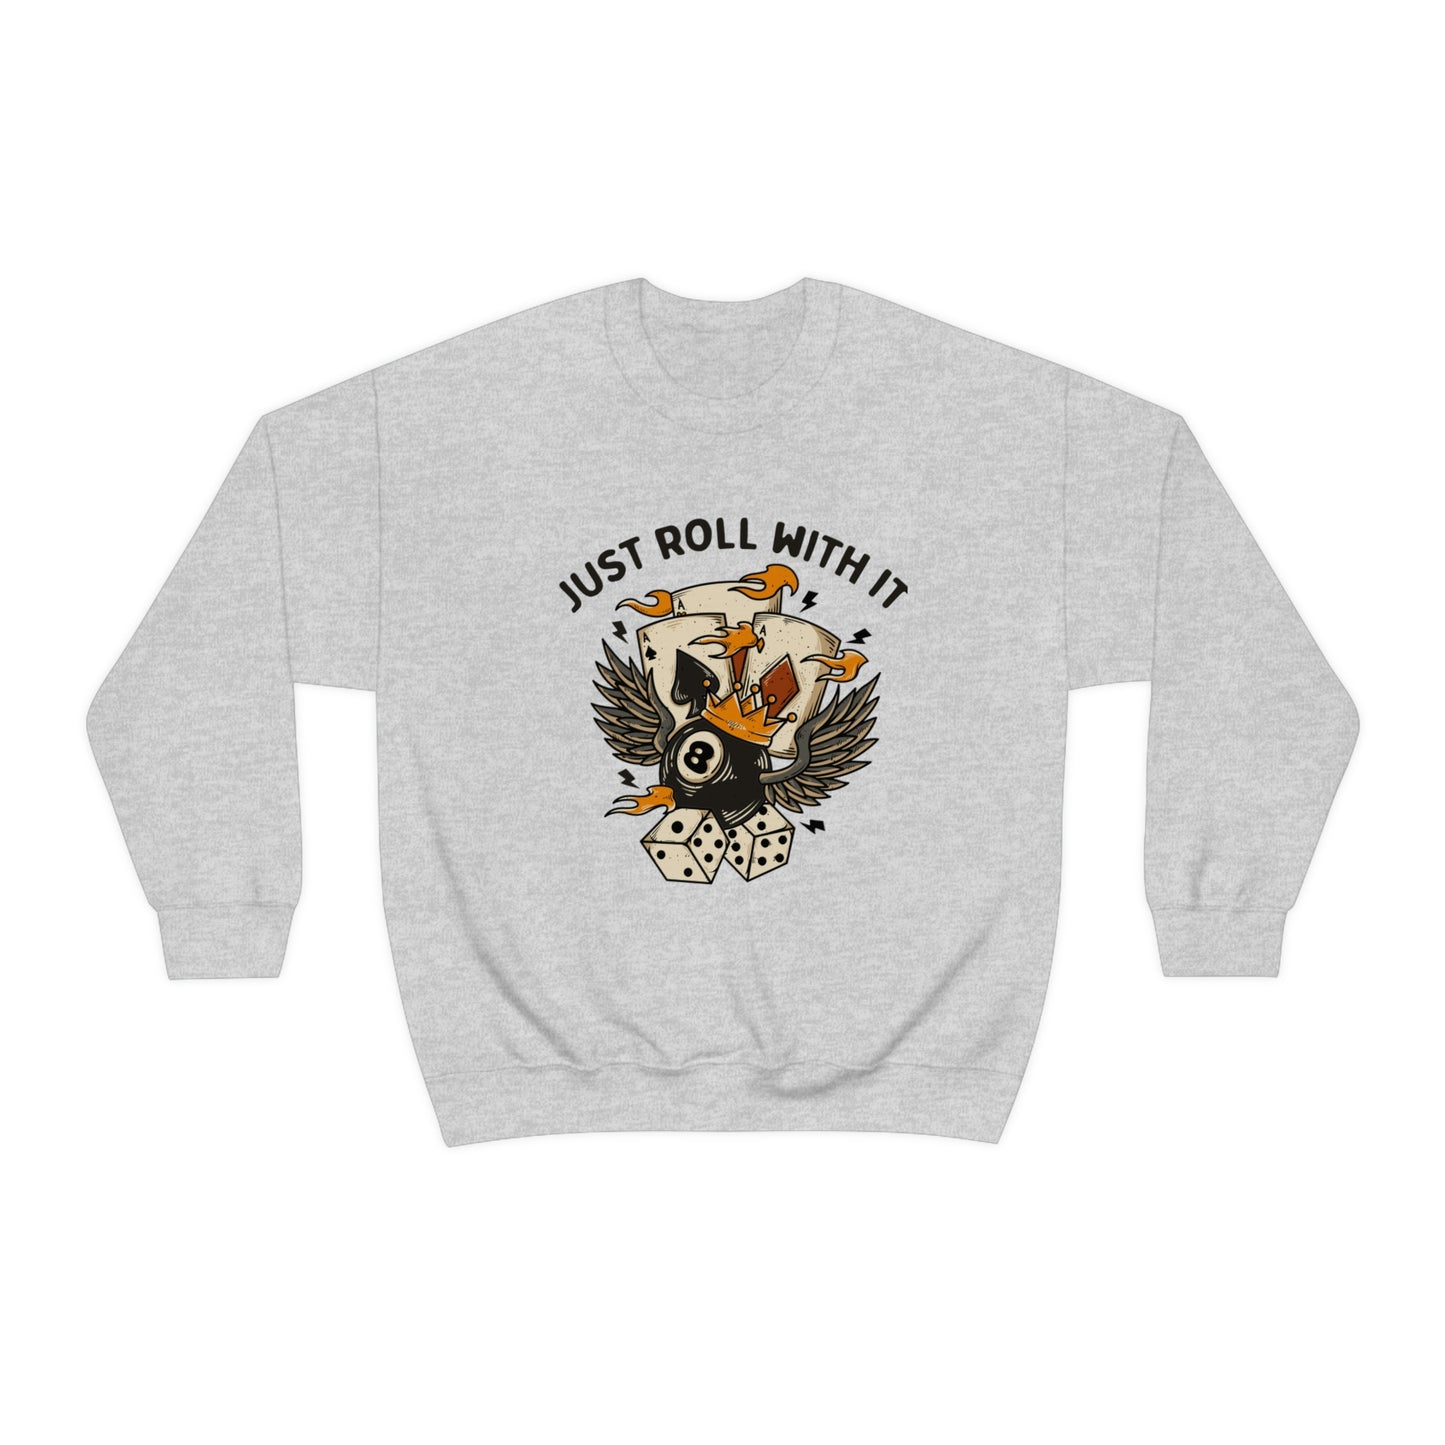 "Just Roll With It" Unisex Crewneck Sweatshirt